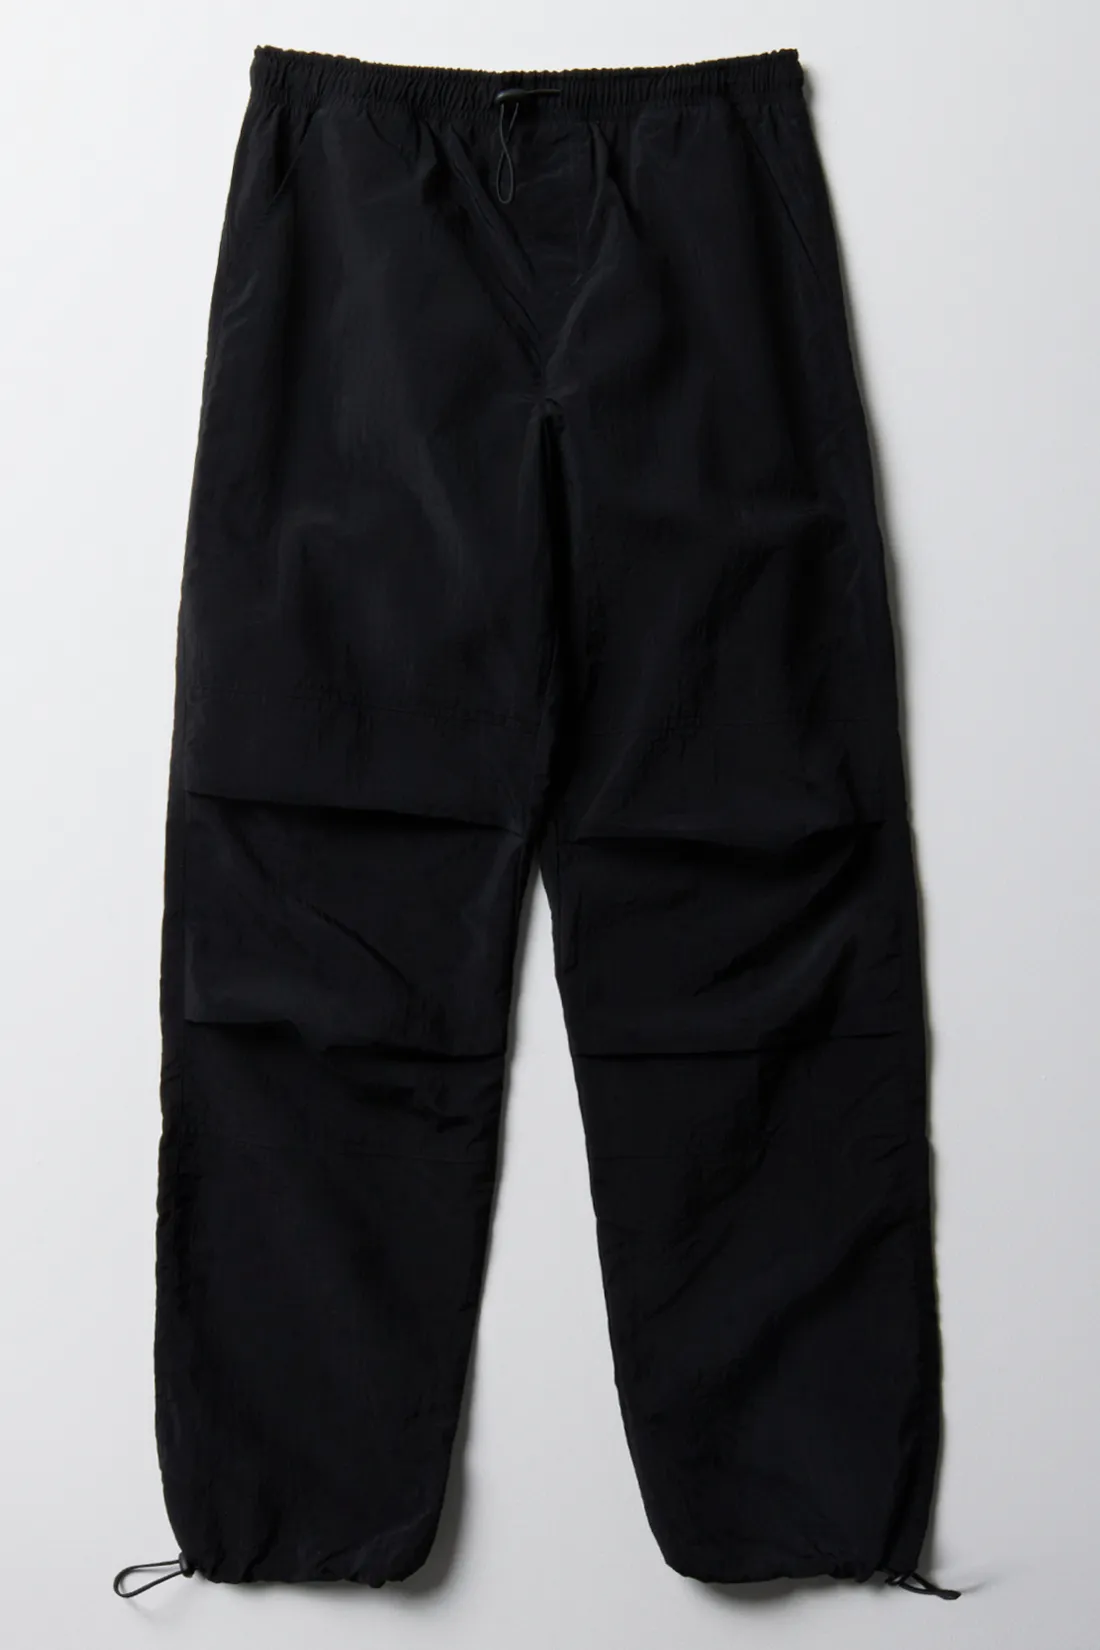 Parachute pants black - LIMITED EDITION Teen Boys Bottoms & Jeans